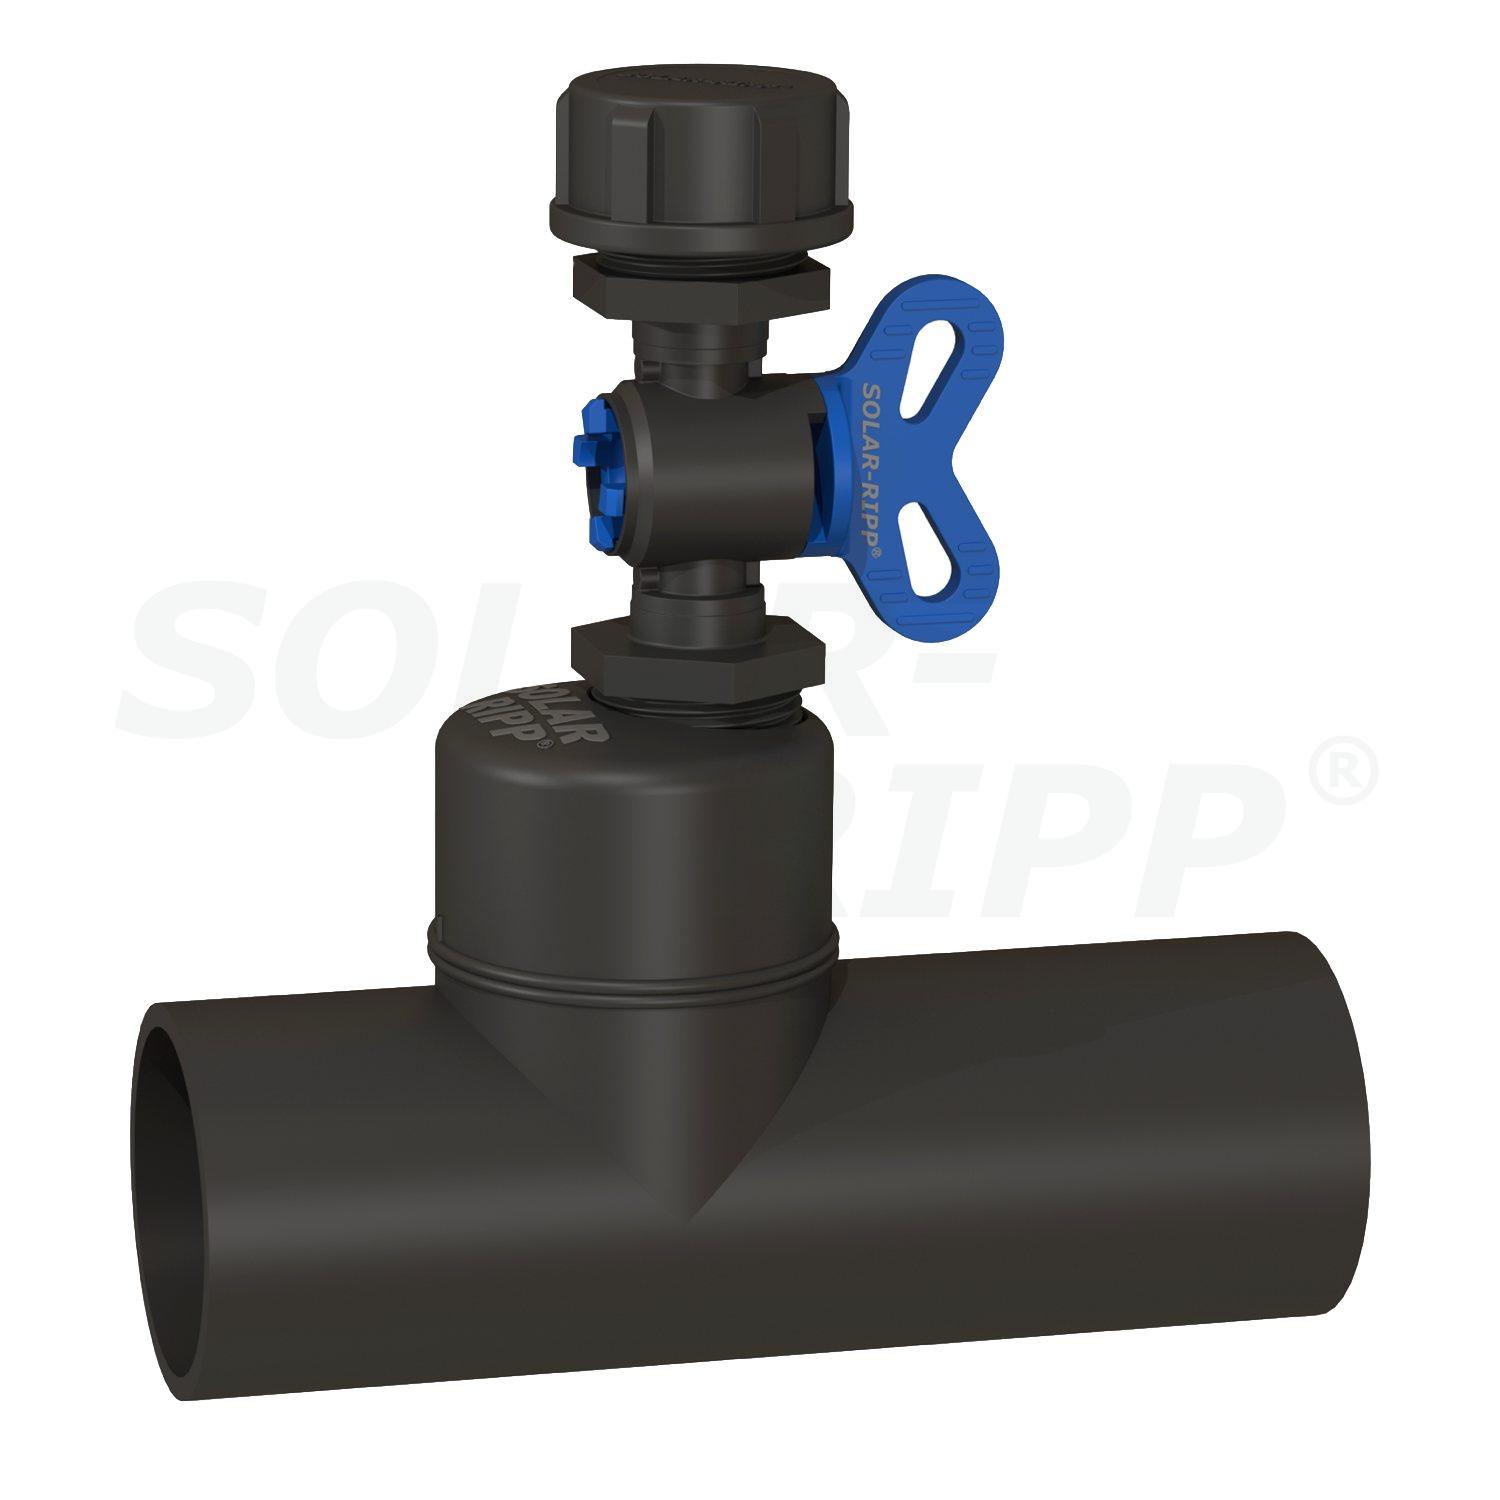 SOLAR-RIPP ® filling fitting/air vent/drainer